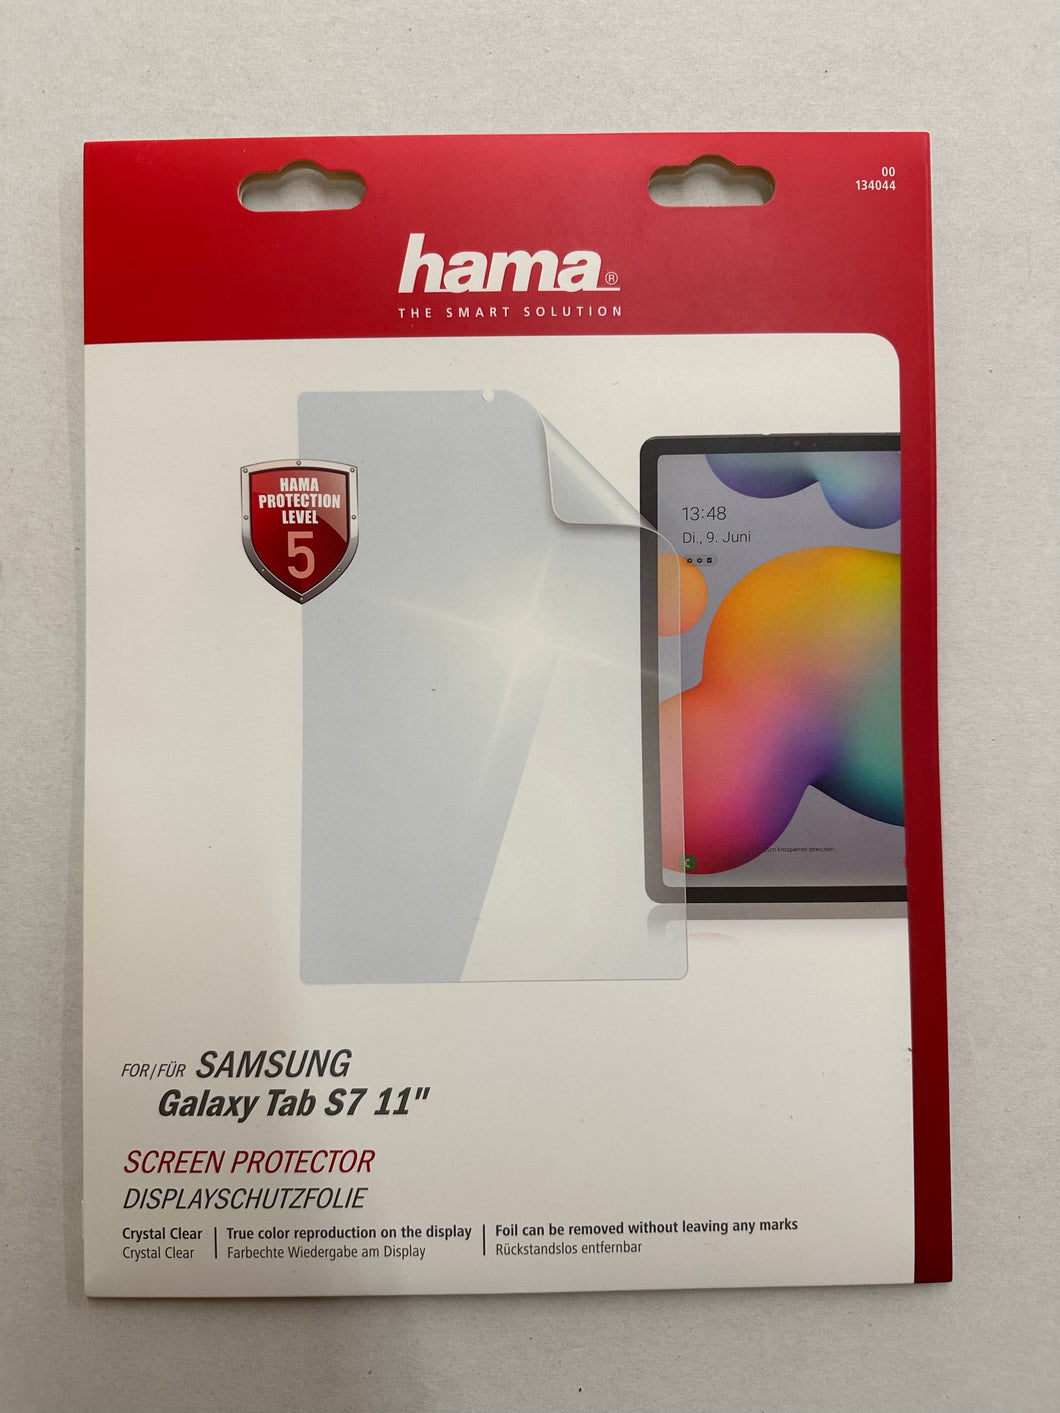 Hama Crystal Clear Displayschutzfolie Samsung Galaxy Tab S7 1St. (134044 )Transparent